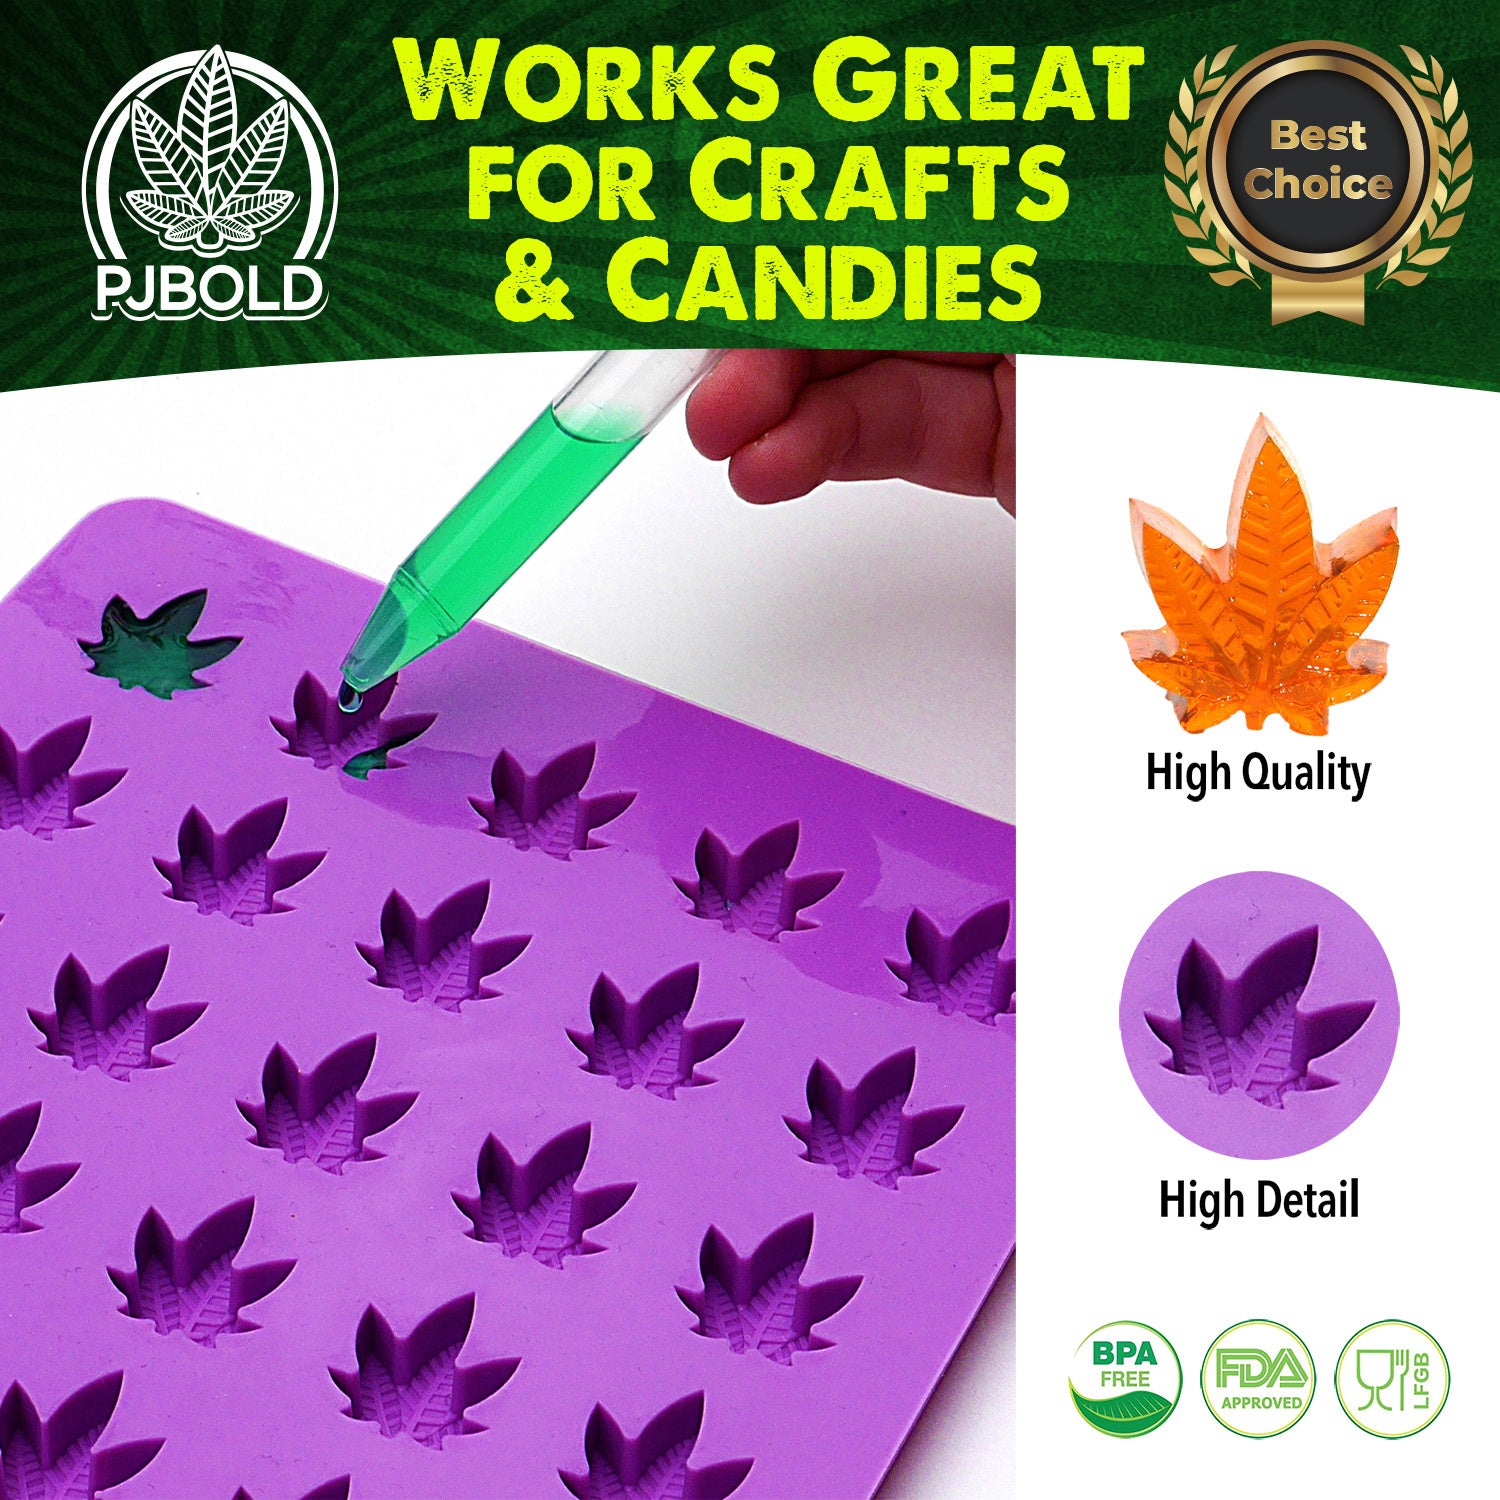 Pj Bold Premium Leaf Soap Mold Tray, 2 Pack, Purple